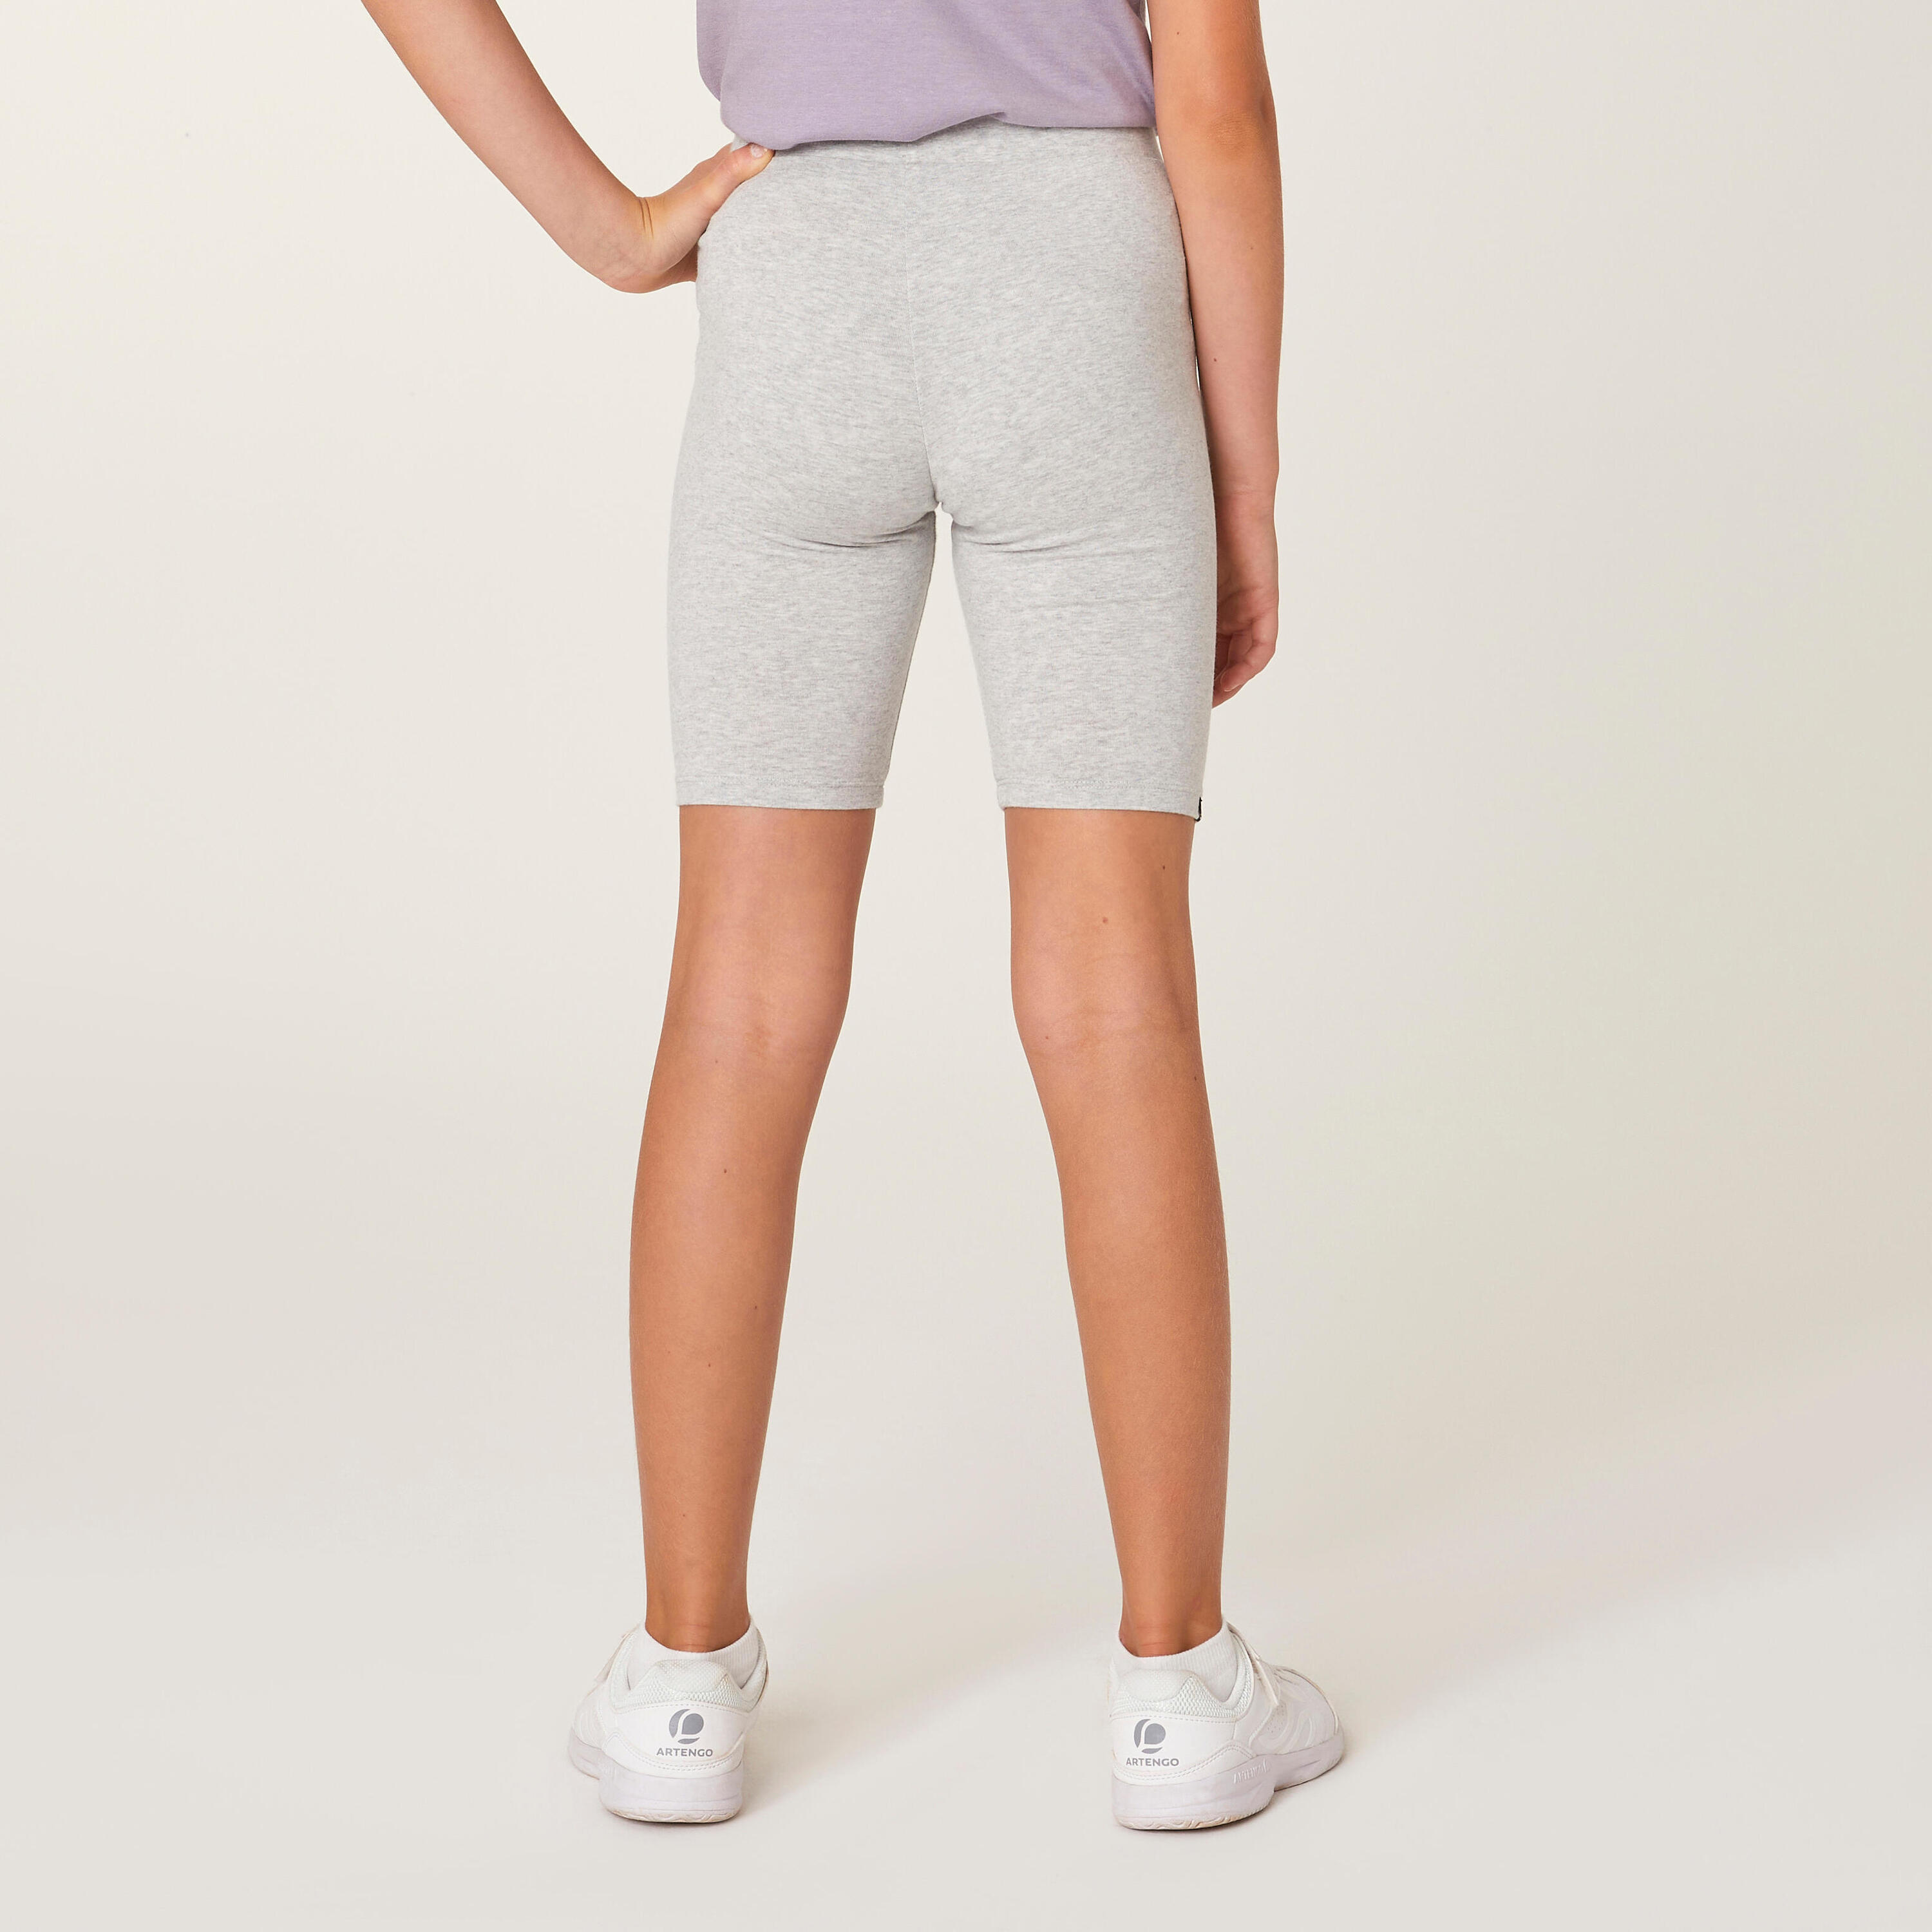 Girls' Cotton Cycling Shorts - Grey 4/4